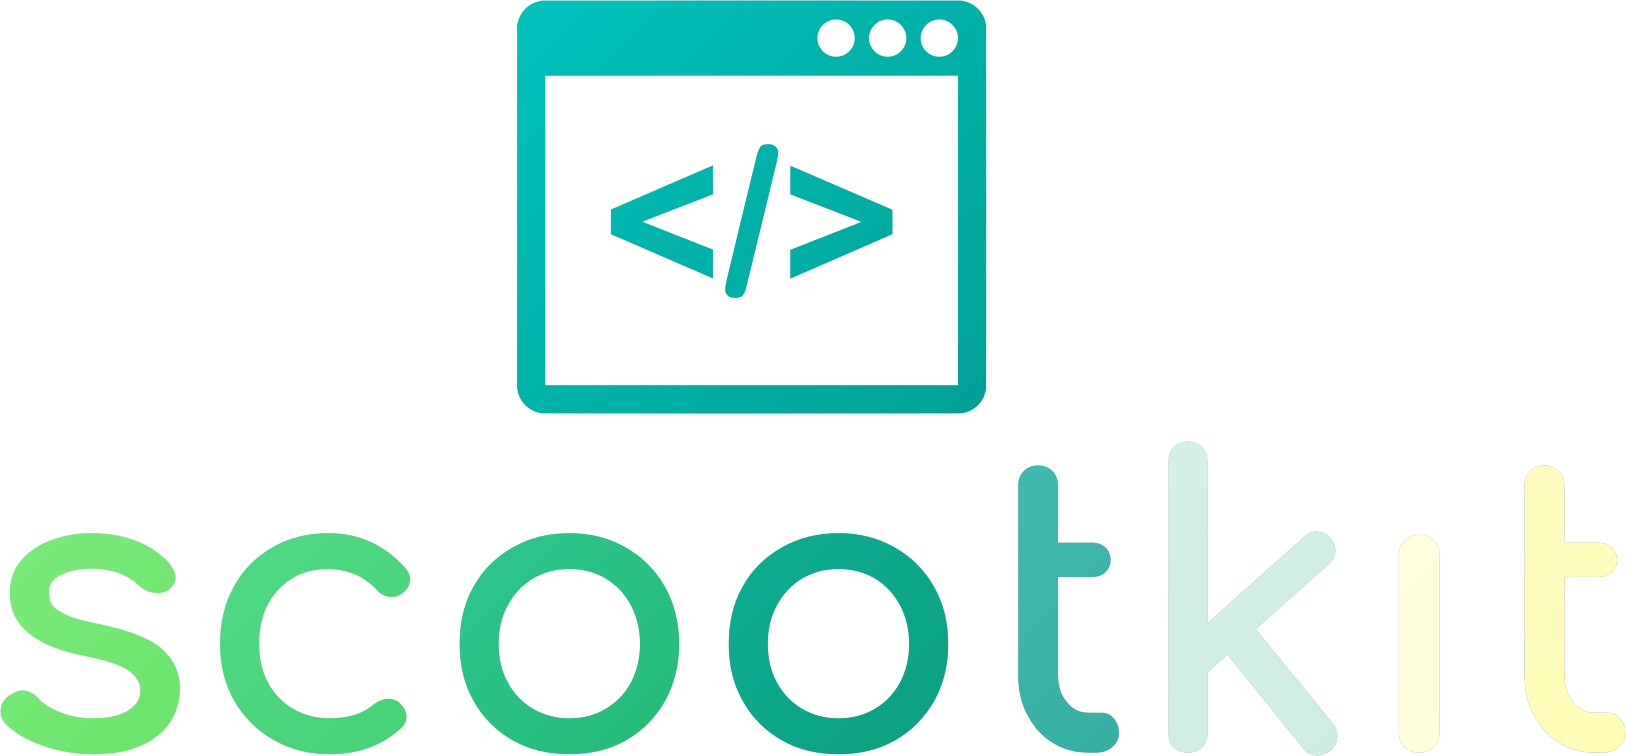 ScootKit Logo